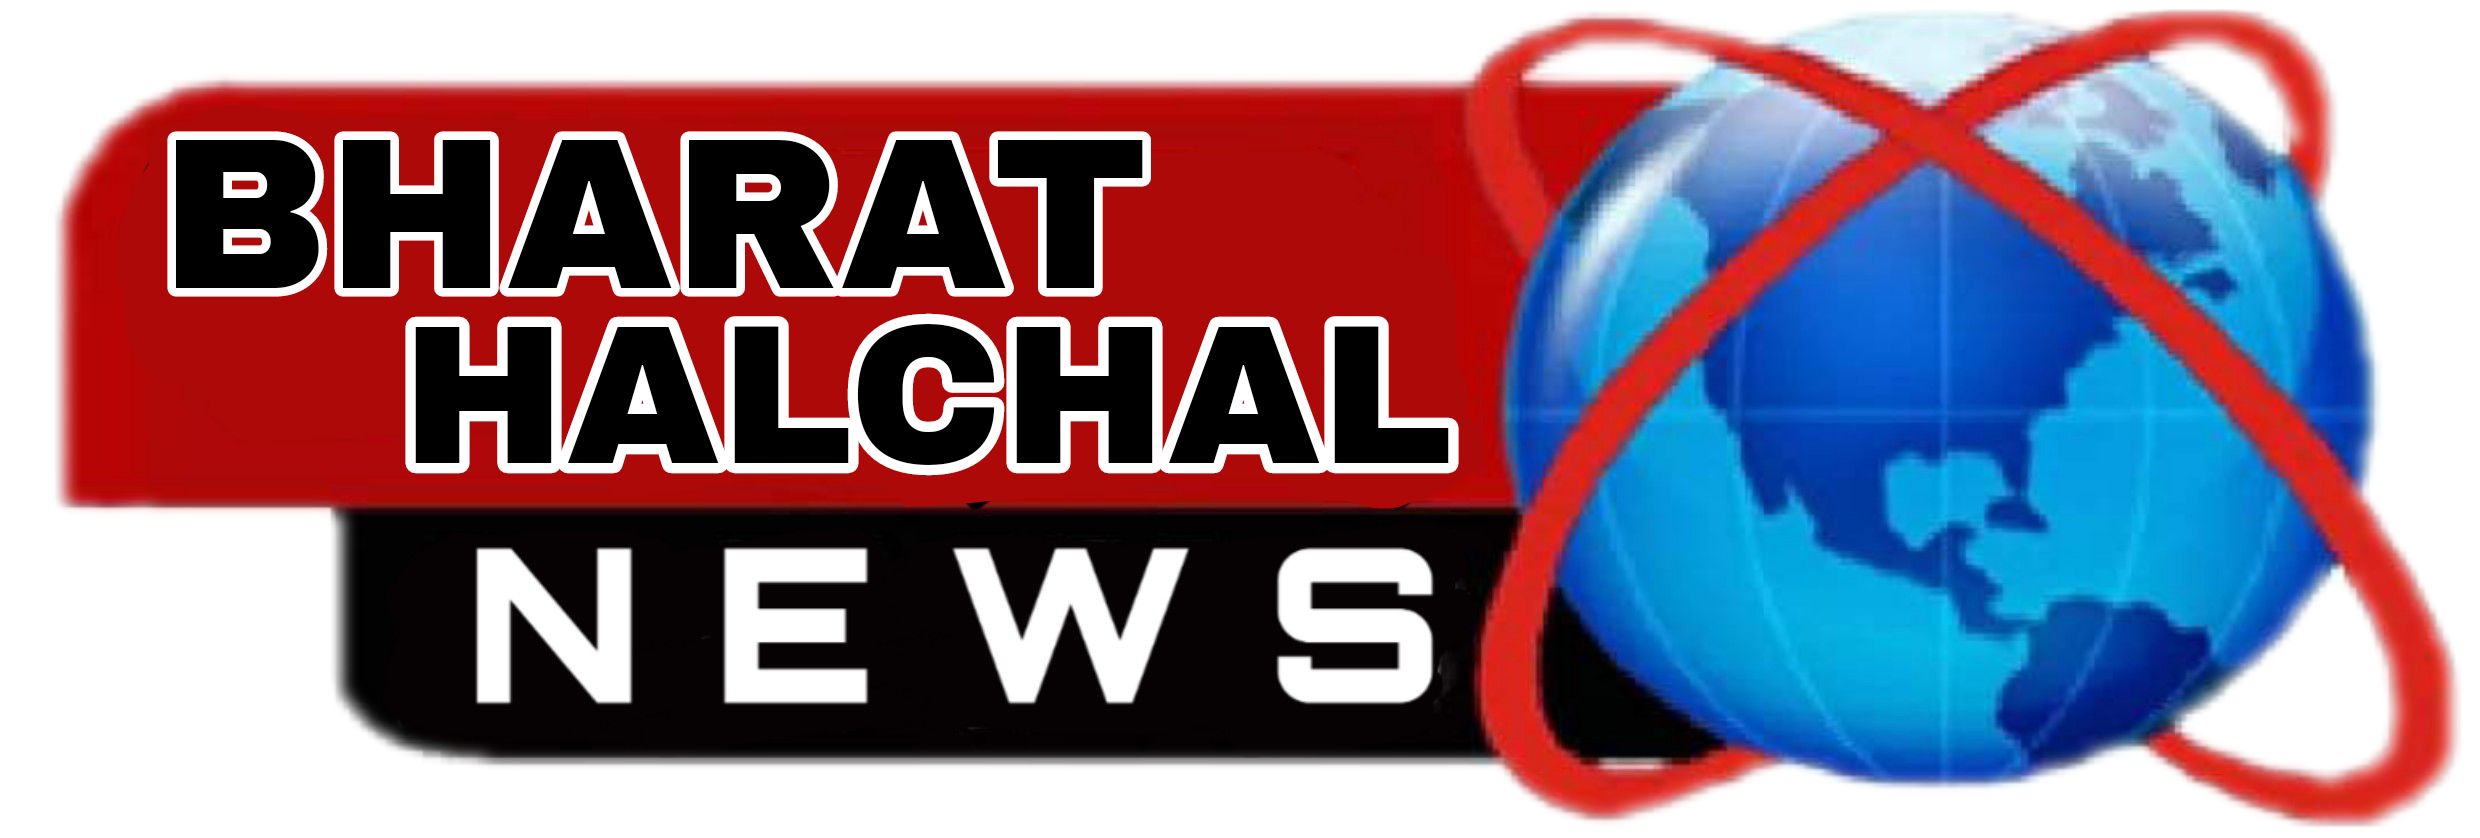 Bharathalchal News